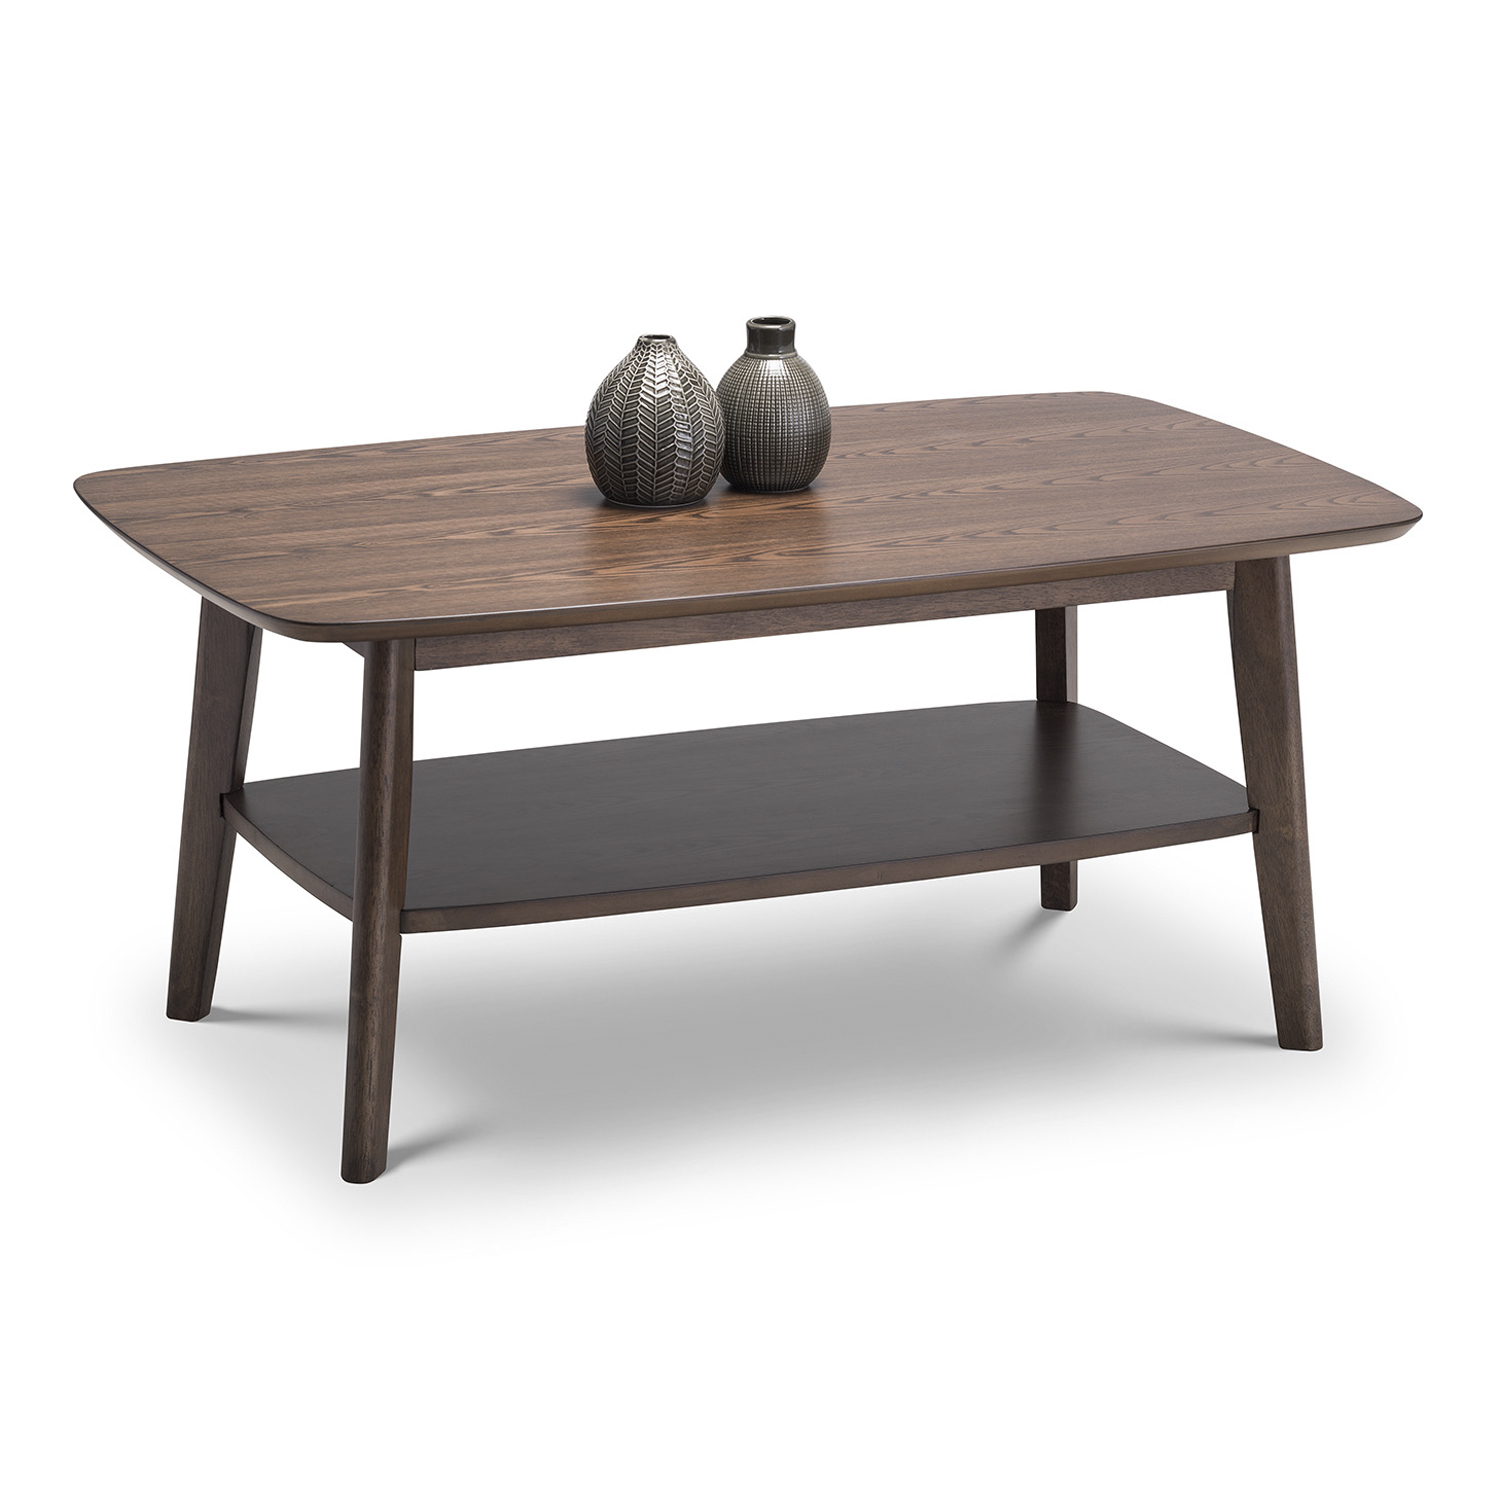 Kensington Coffee Table With Shelf regarding proportions 1500 X 1500